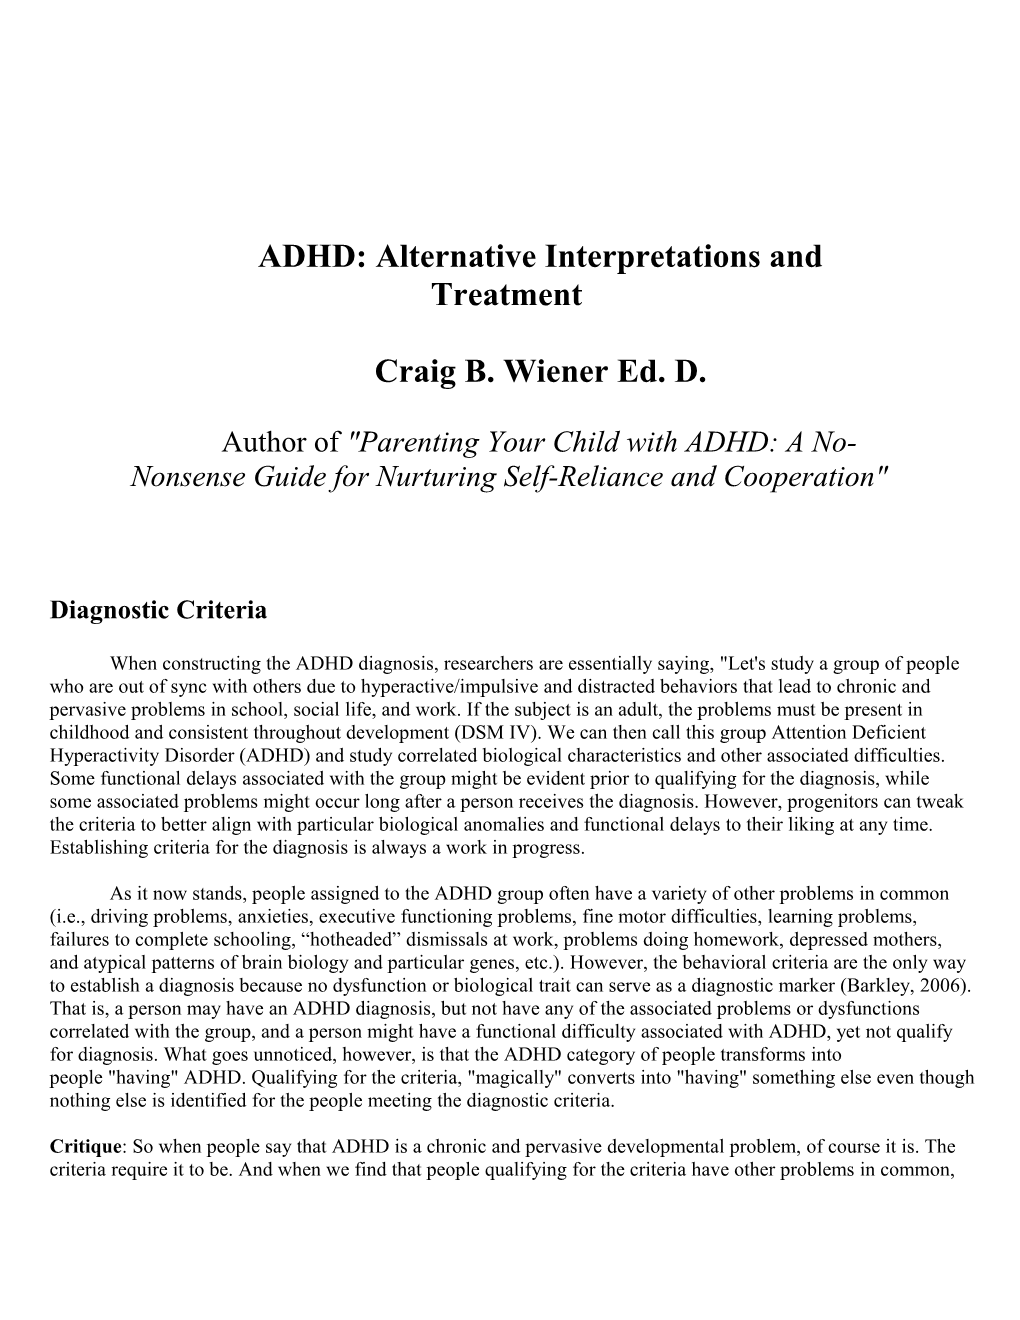 ADHD: Alternative Interpretations and Treatment